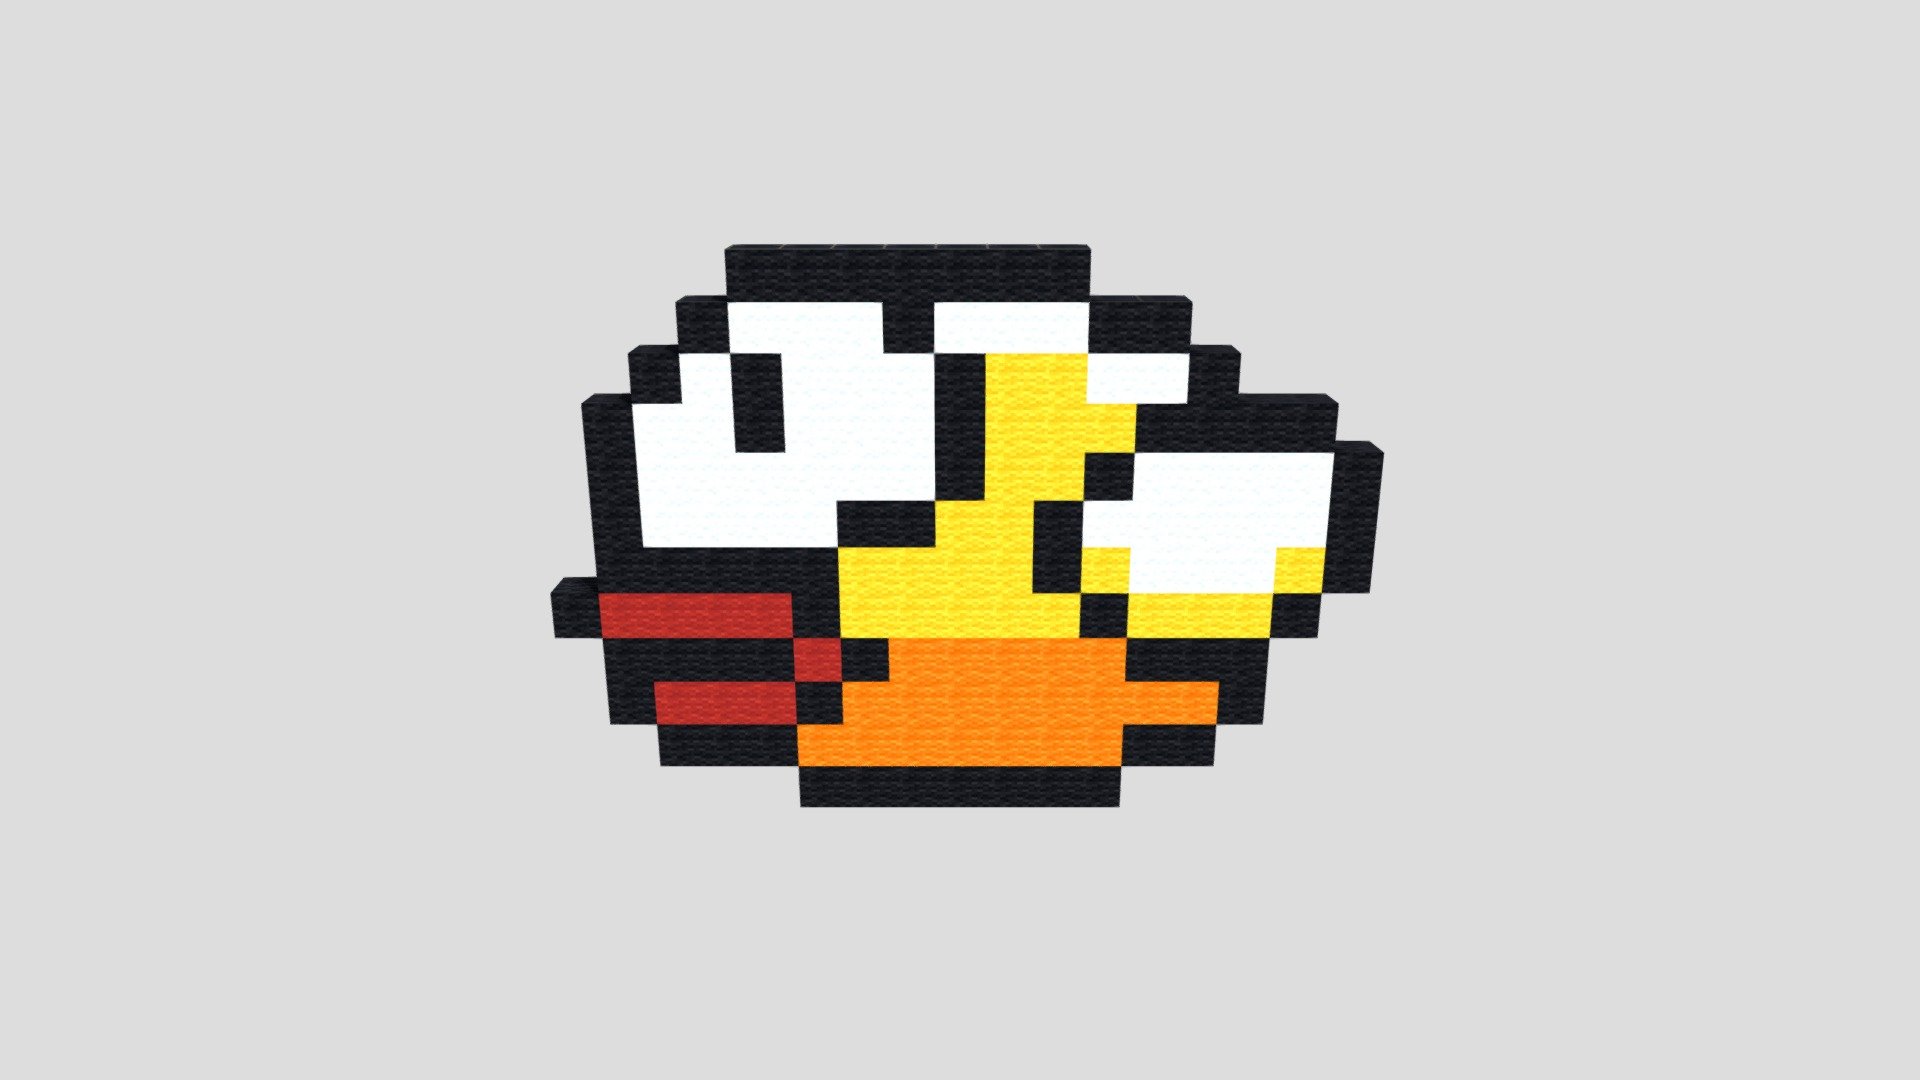 Flappy Bird 3D - Jouez à Flappy Bird 3D sur Poki